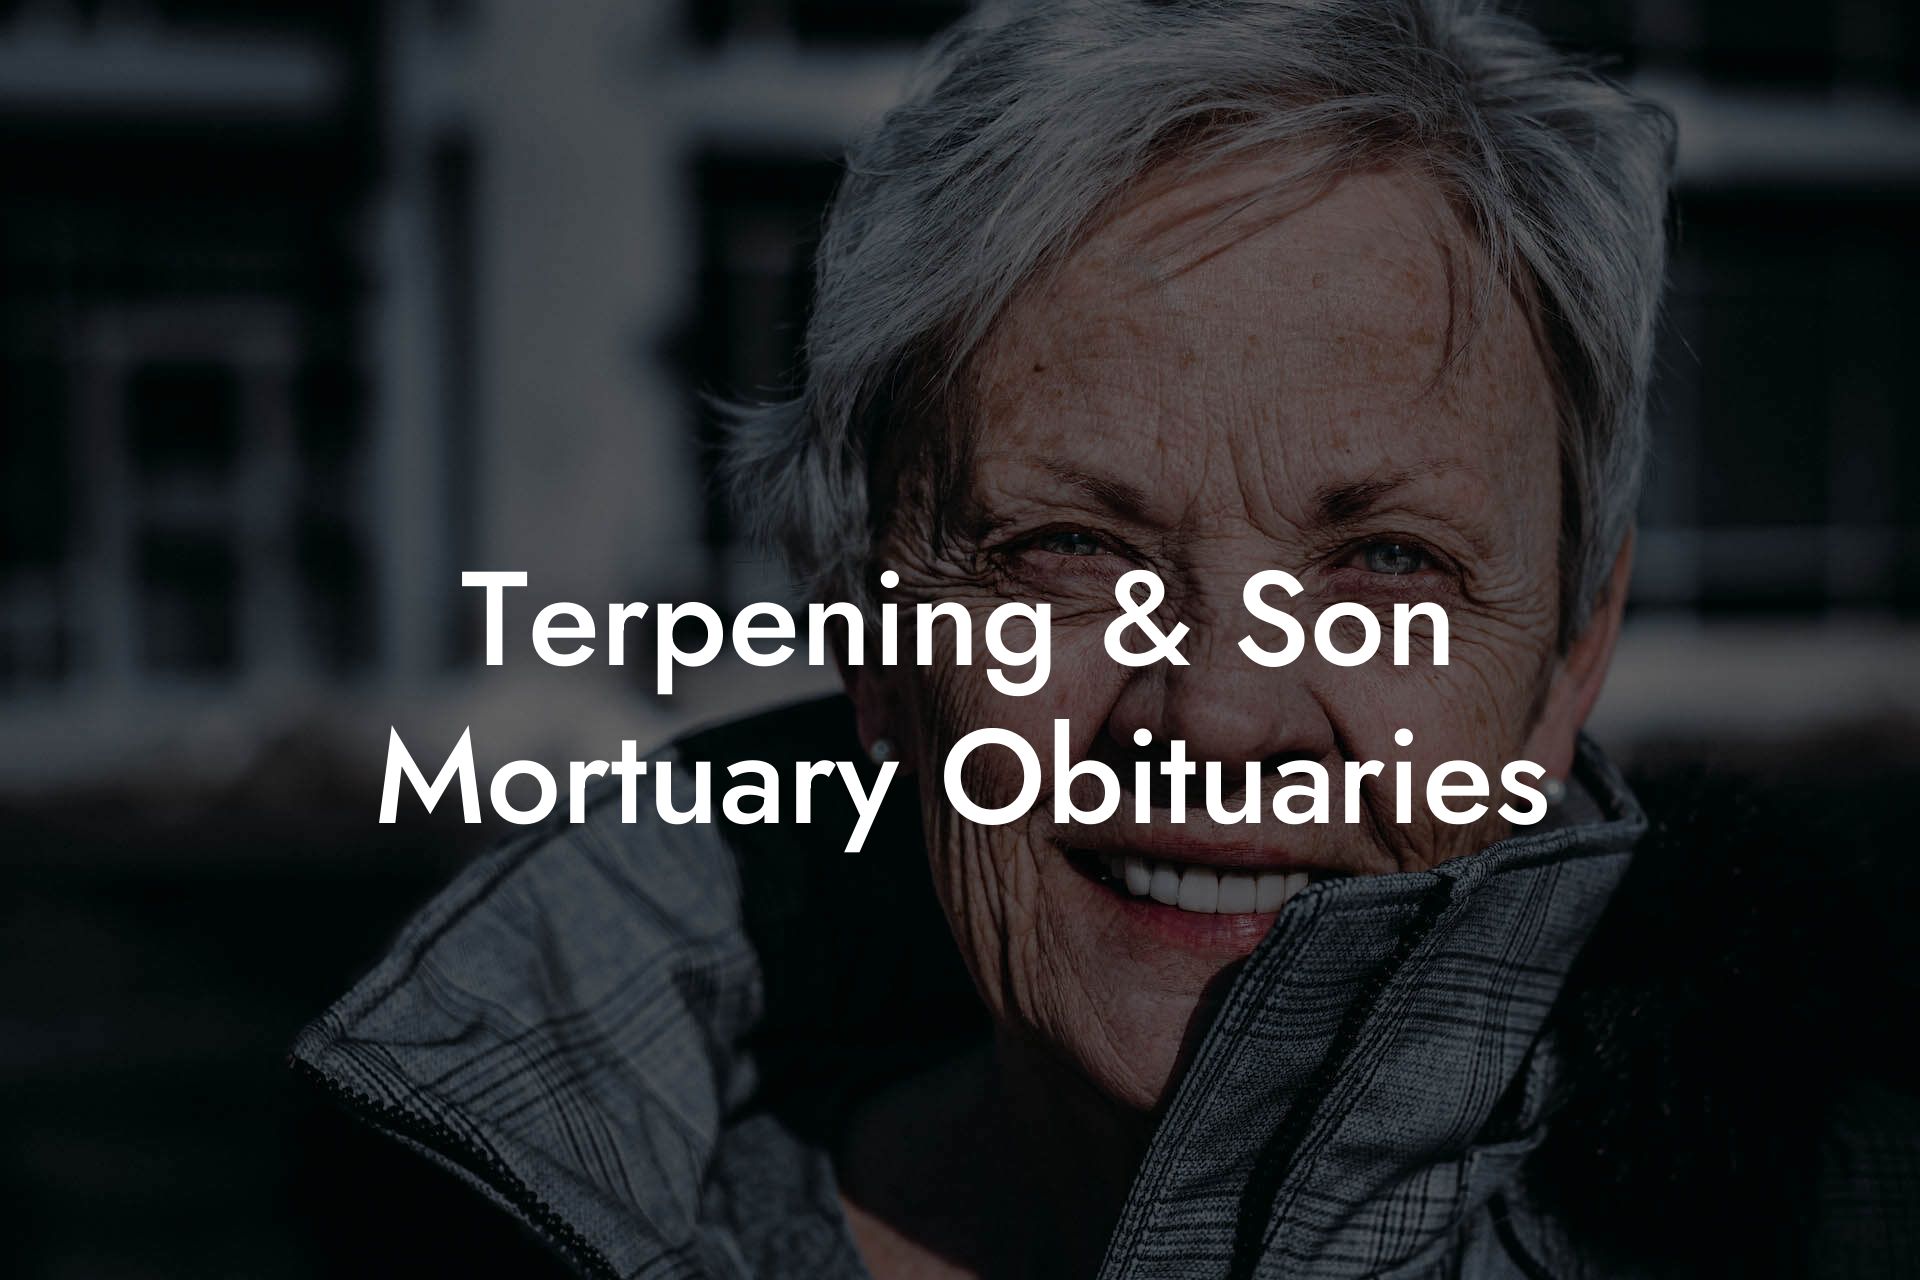 Terpening & Son Mortuary Obituaries